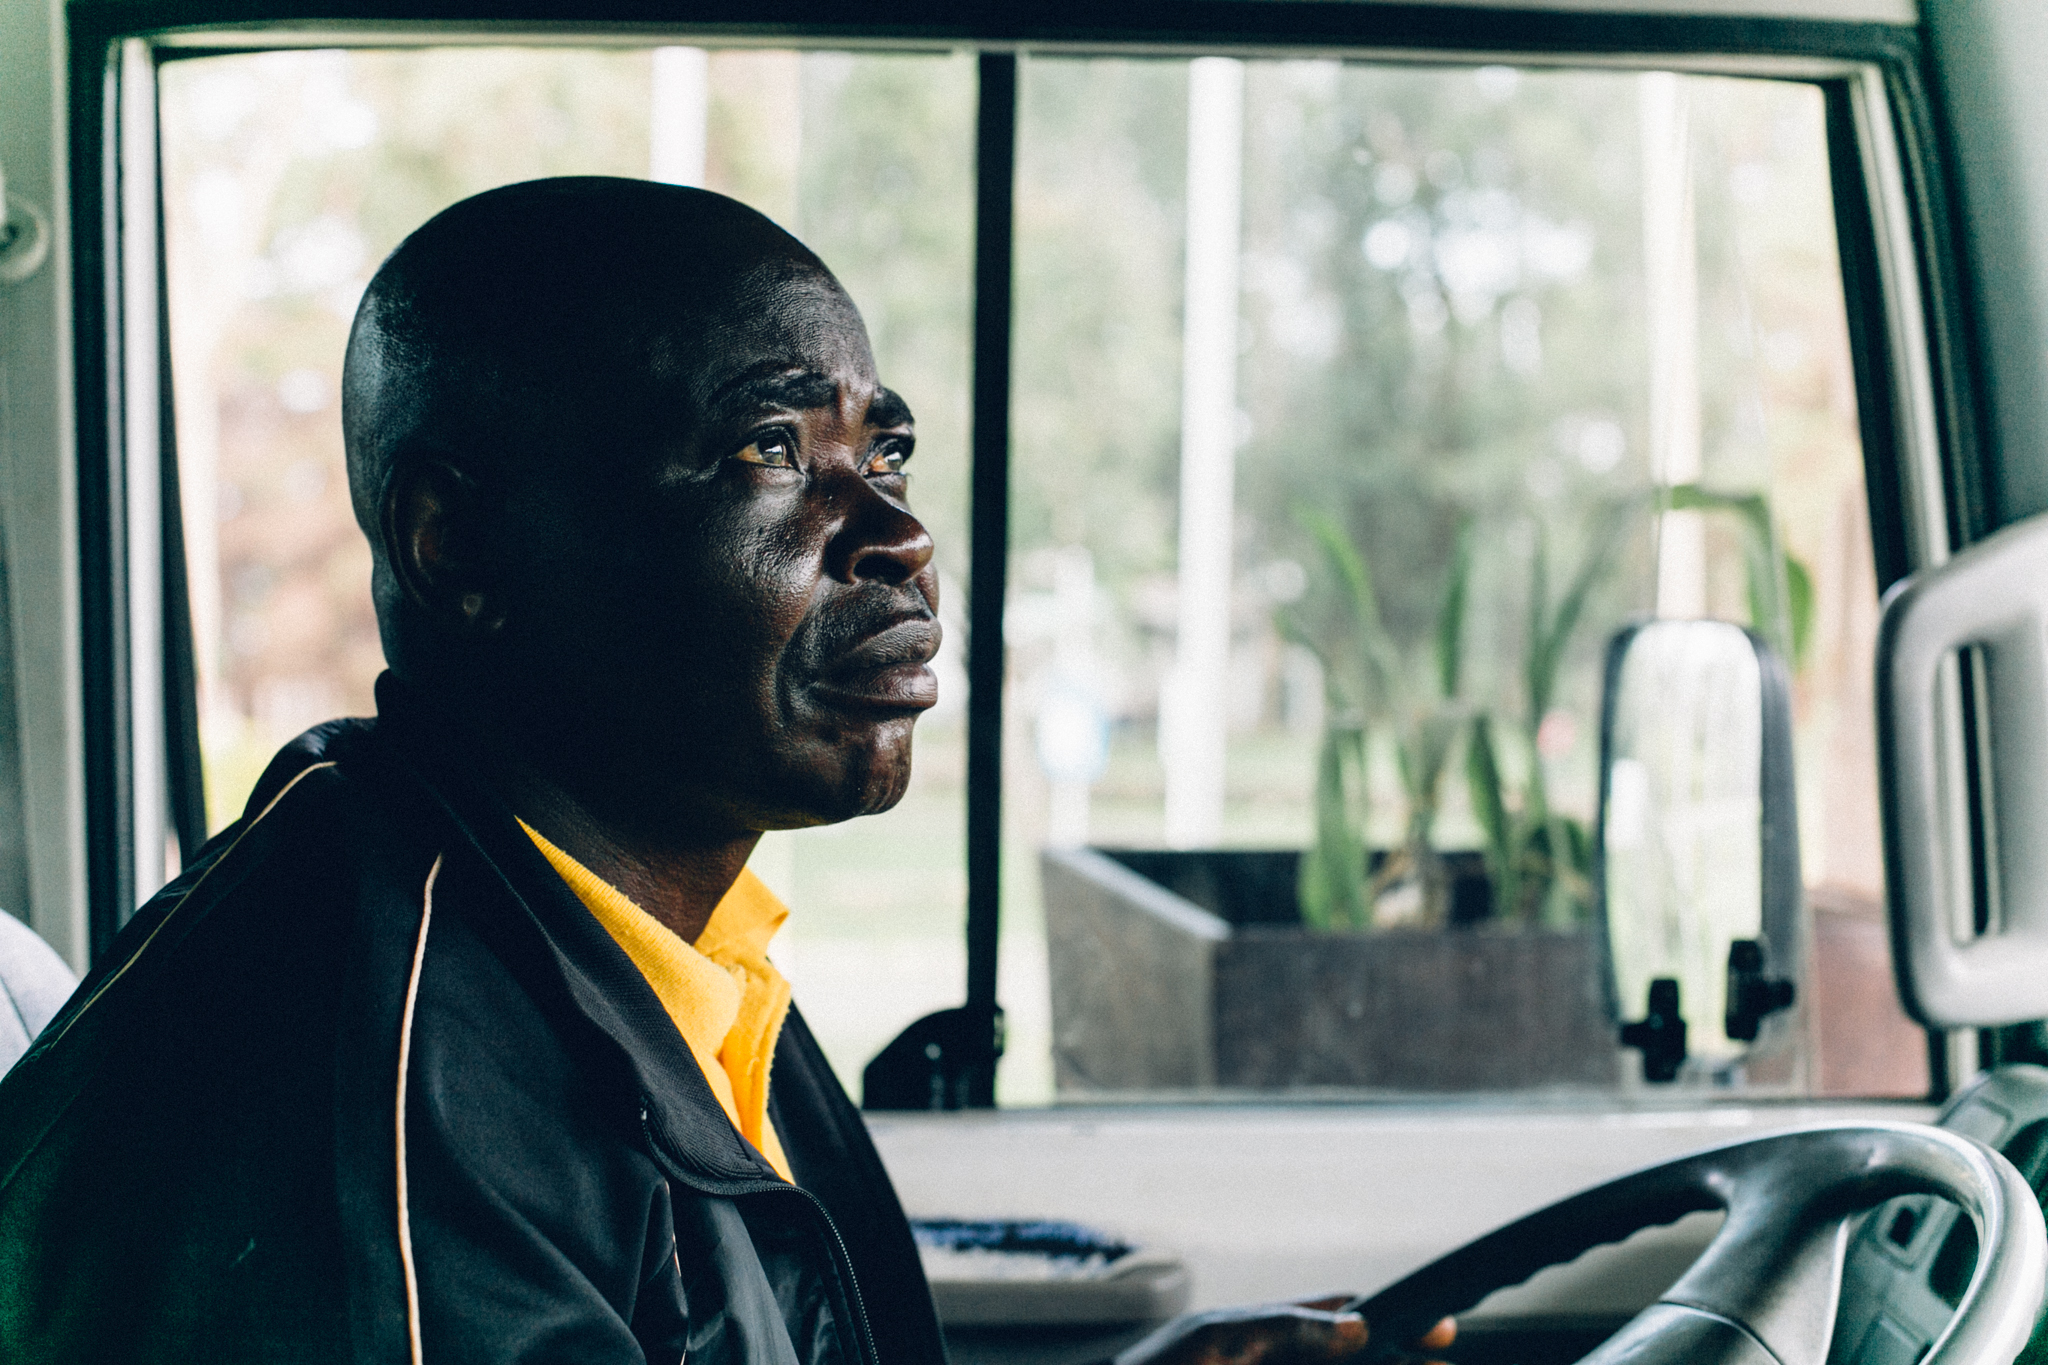 Tour bus driver, Obudu